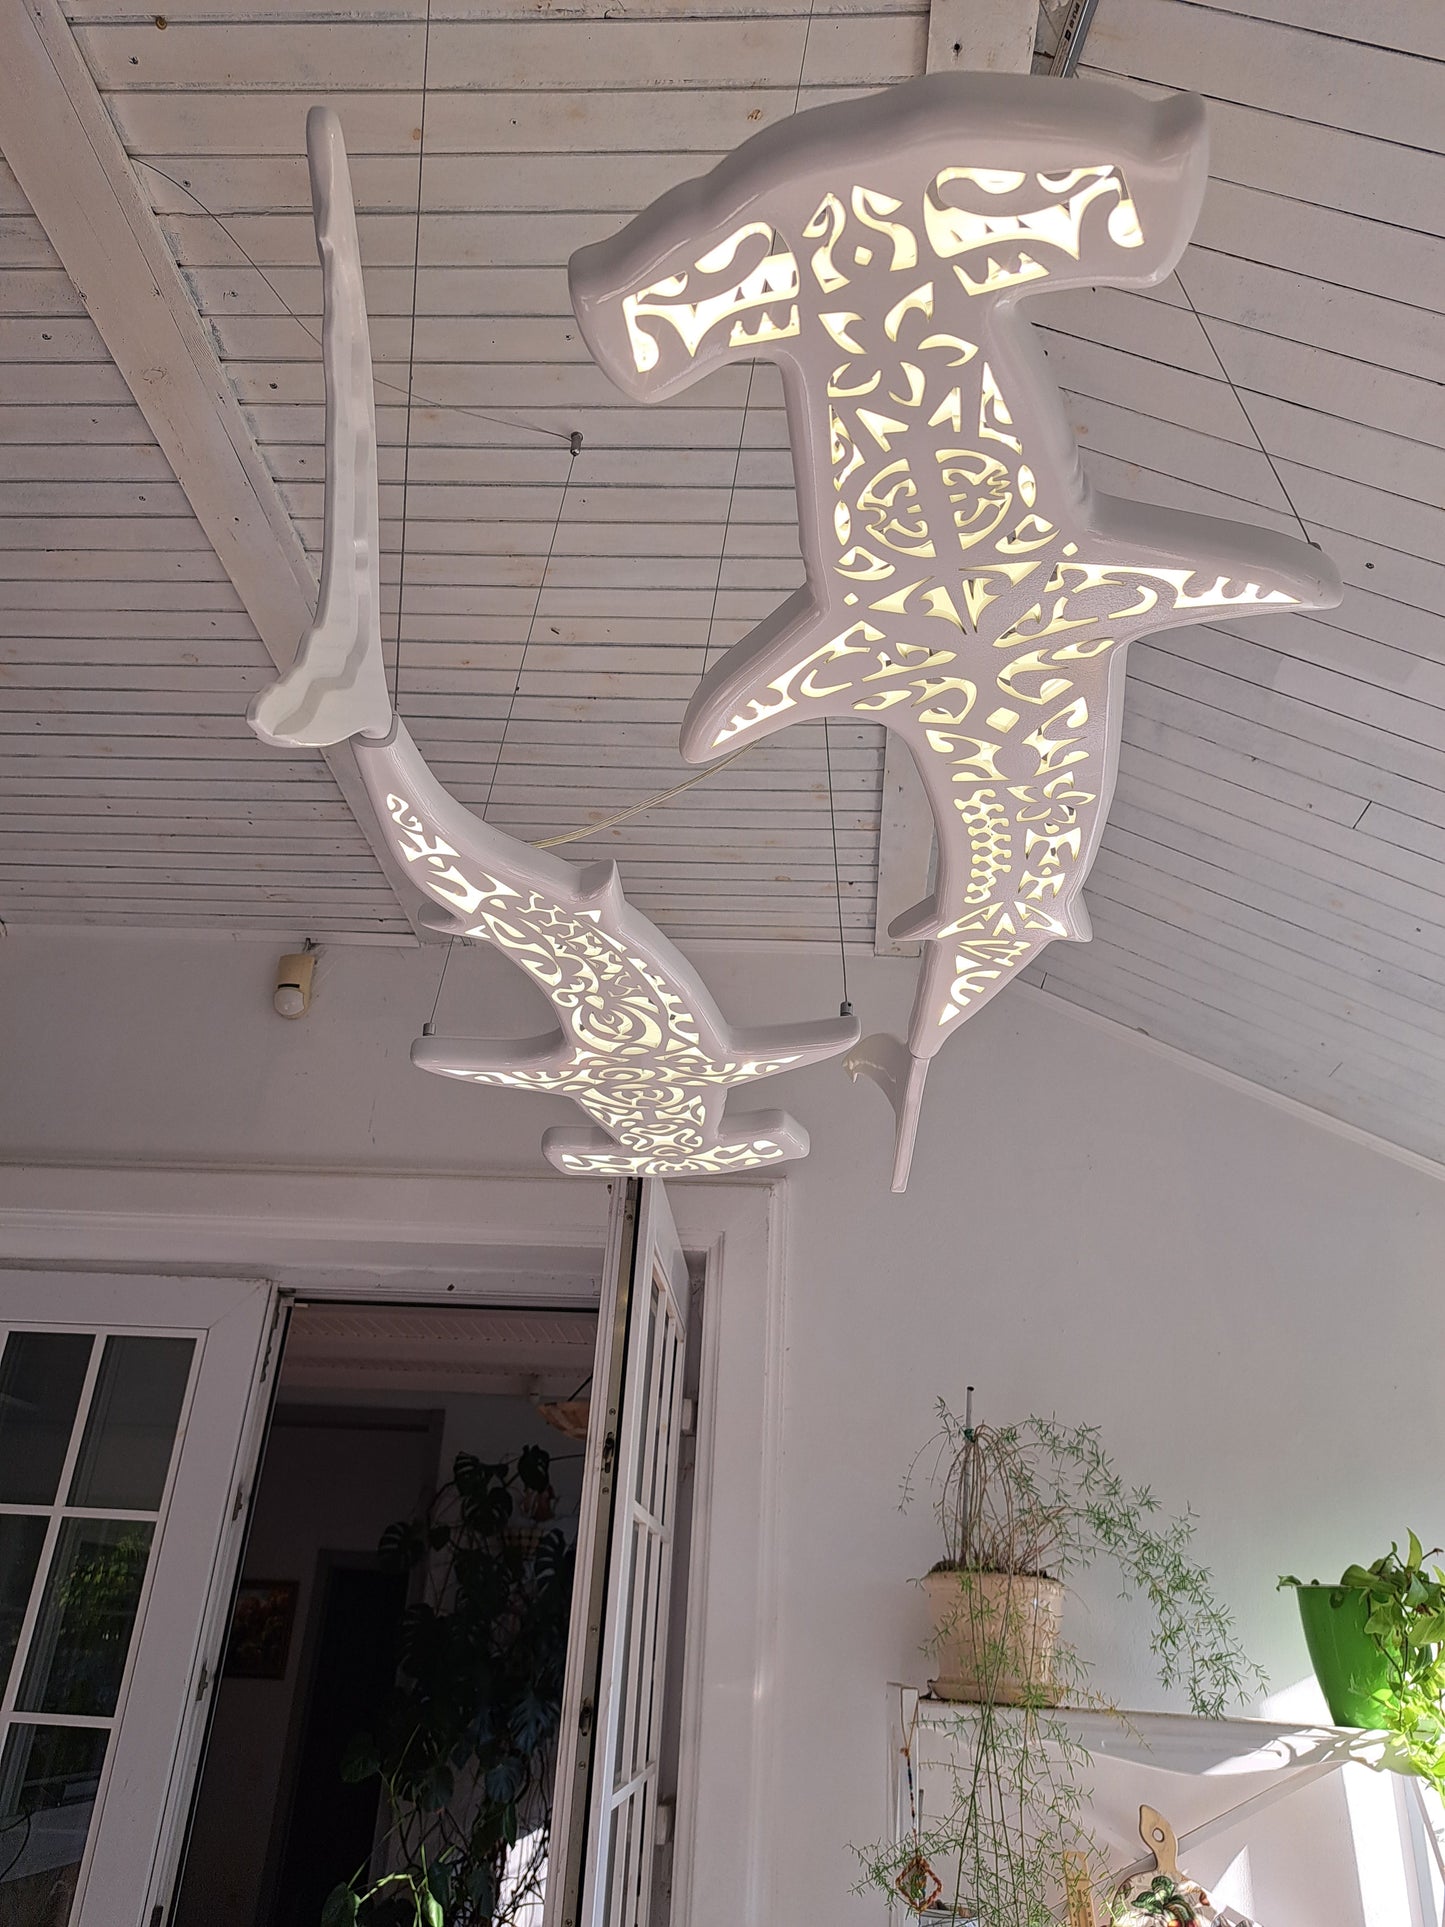 150 cm Handmade wood ceiling chandelier with 2 hammerhead sharks: LED wall light for beach coastal or nautical Maori surfing style room decor